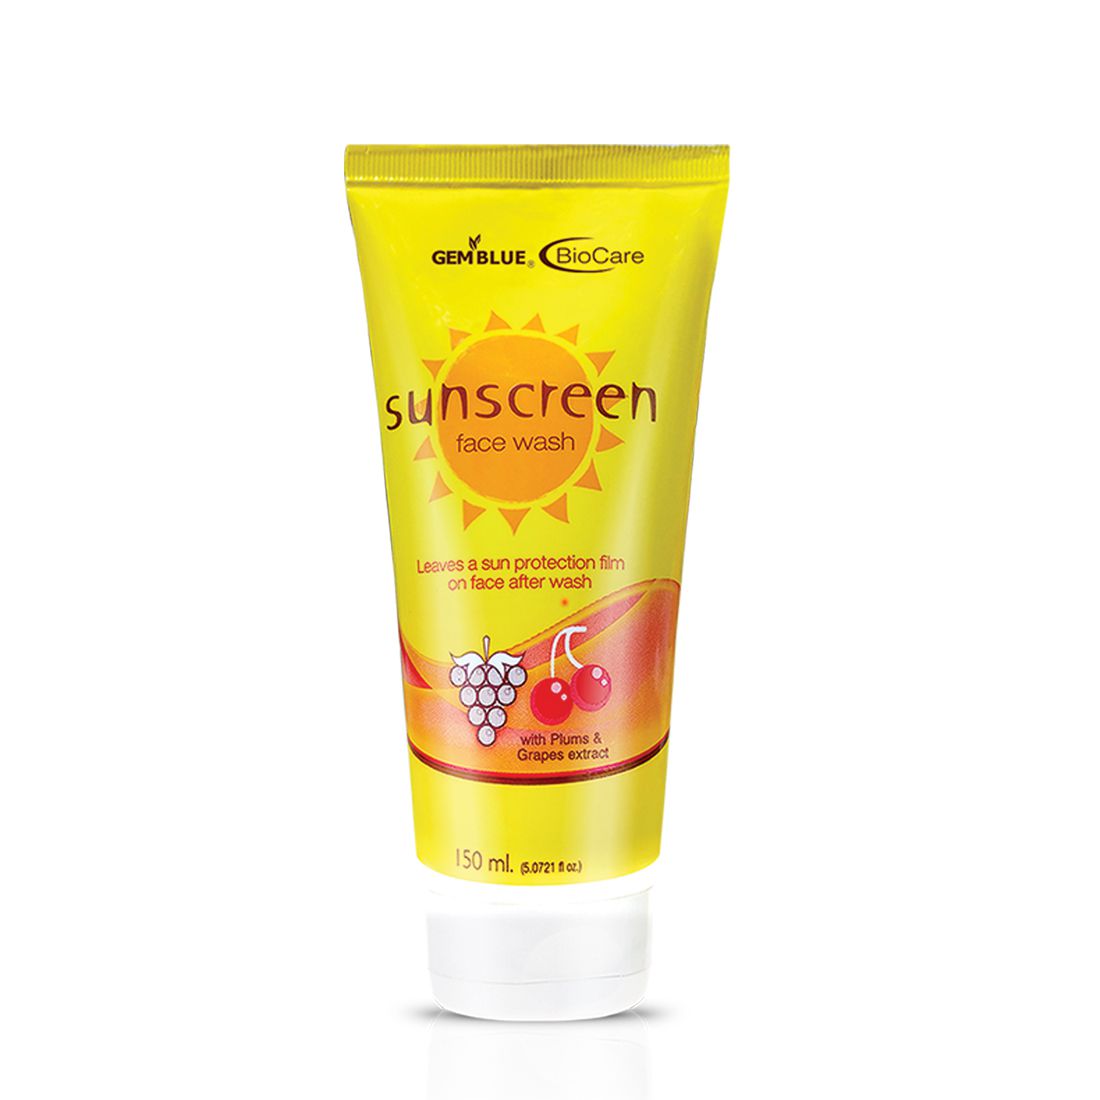     			gemblue biocare Refreshing Sunscreen Face Wash 150 mL